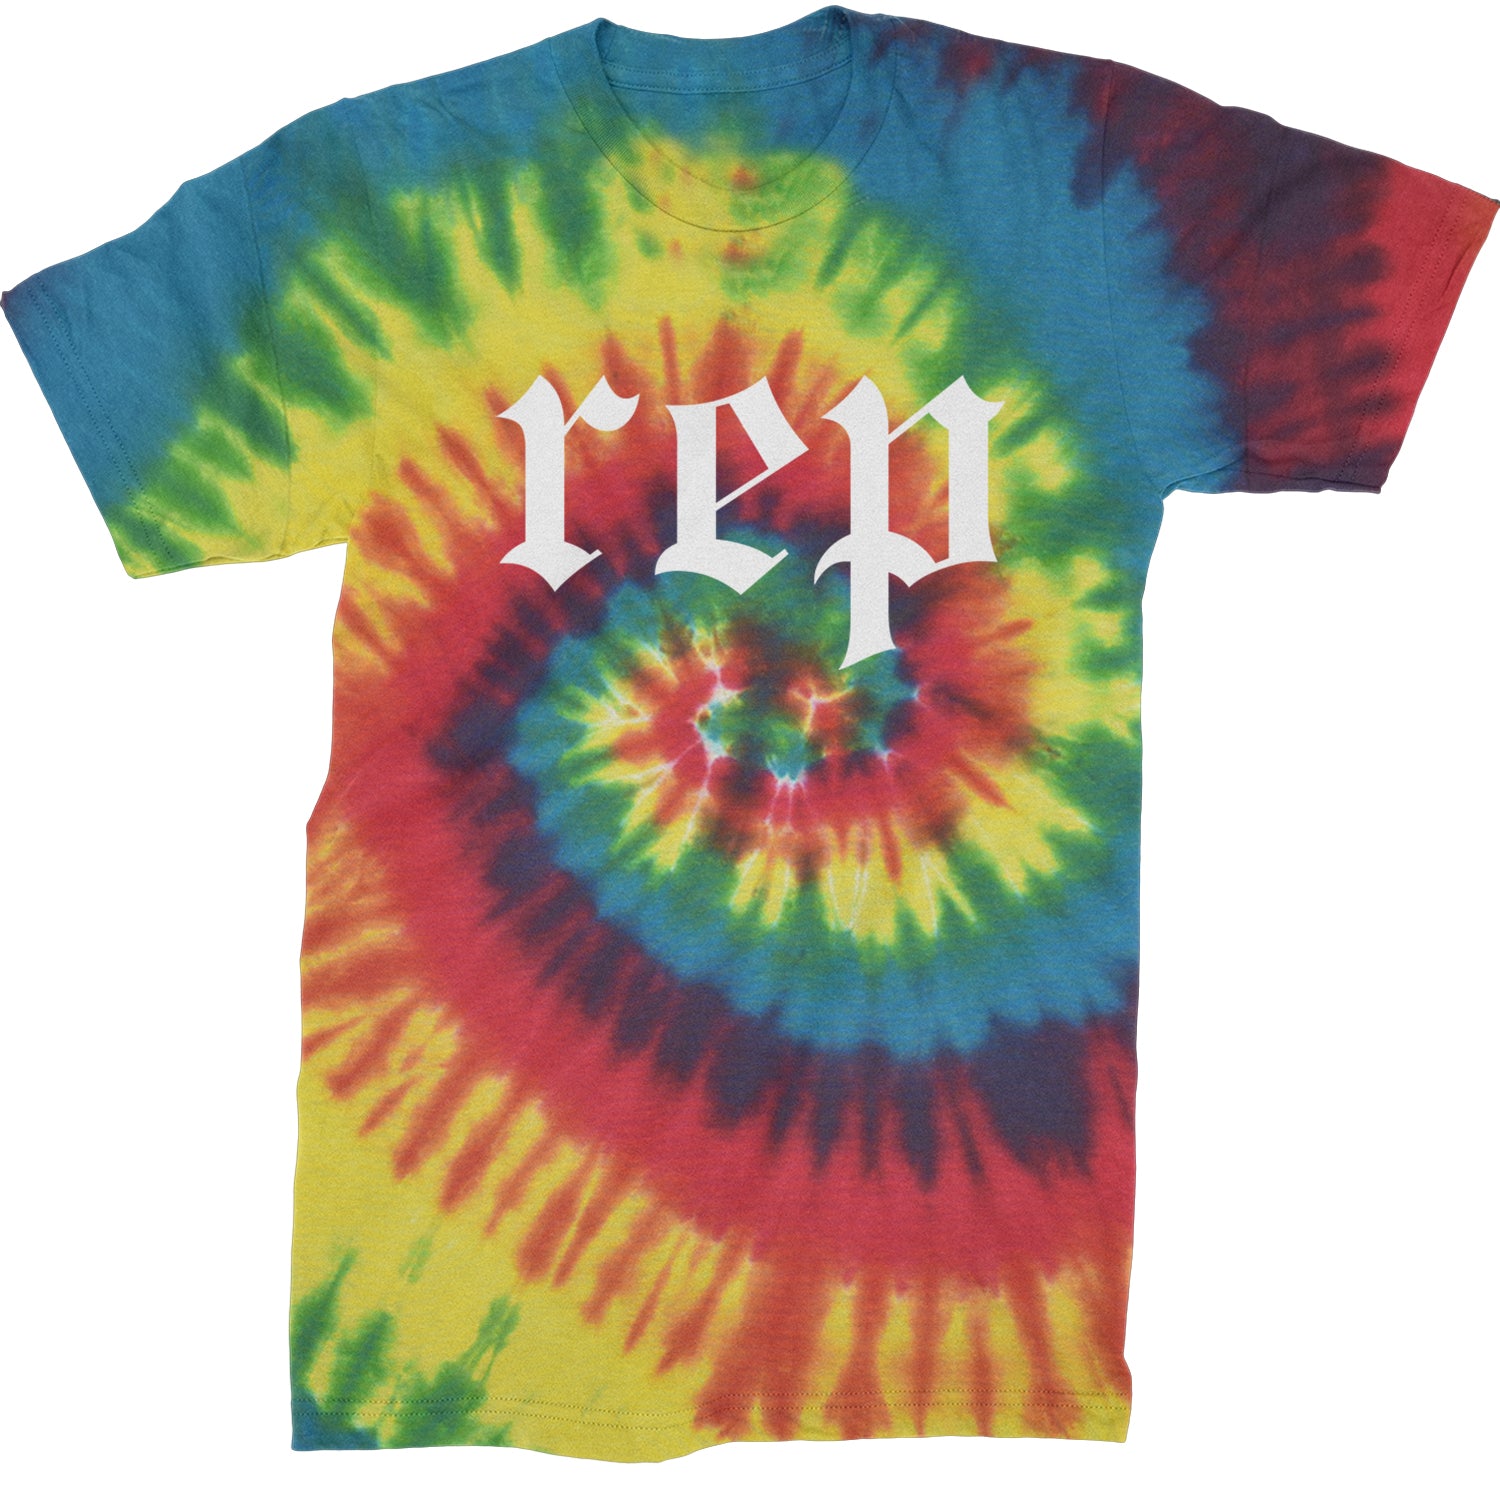 REP Reputation Eras Music Lover Gift Fan Favorite Mens T-shirt Tie-Dye Rainbow Reactive